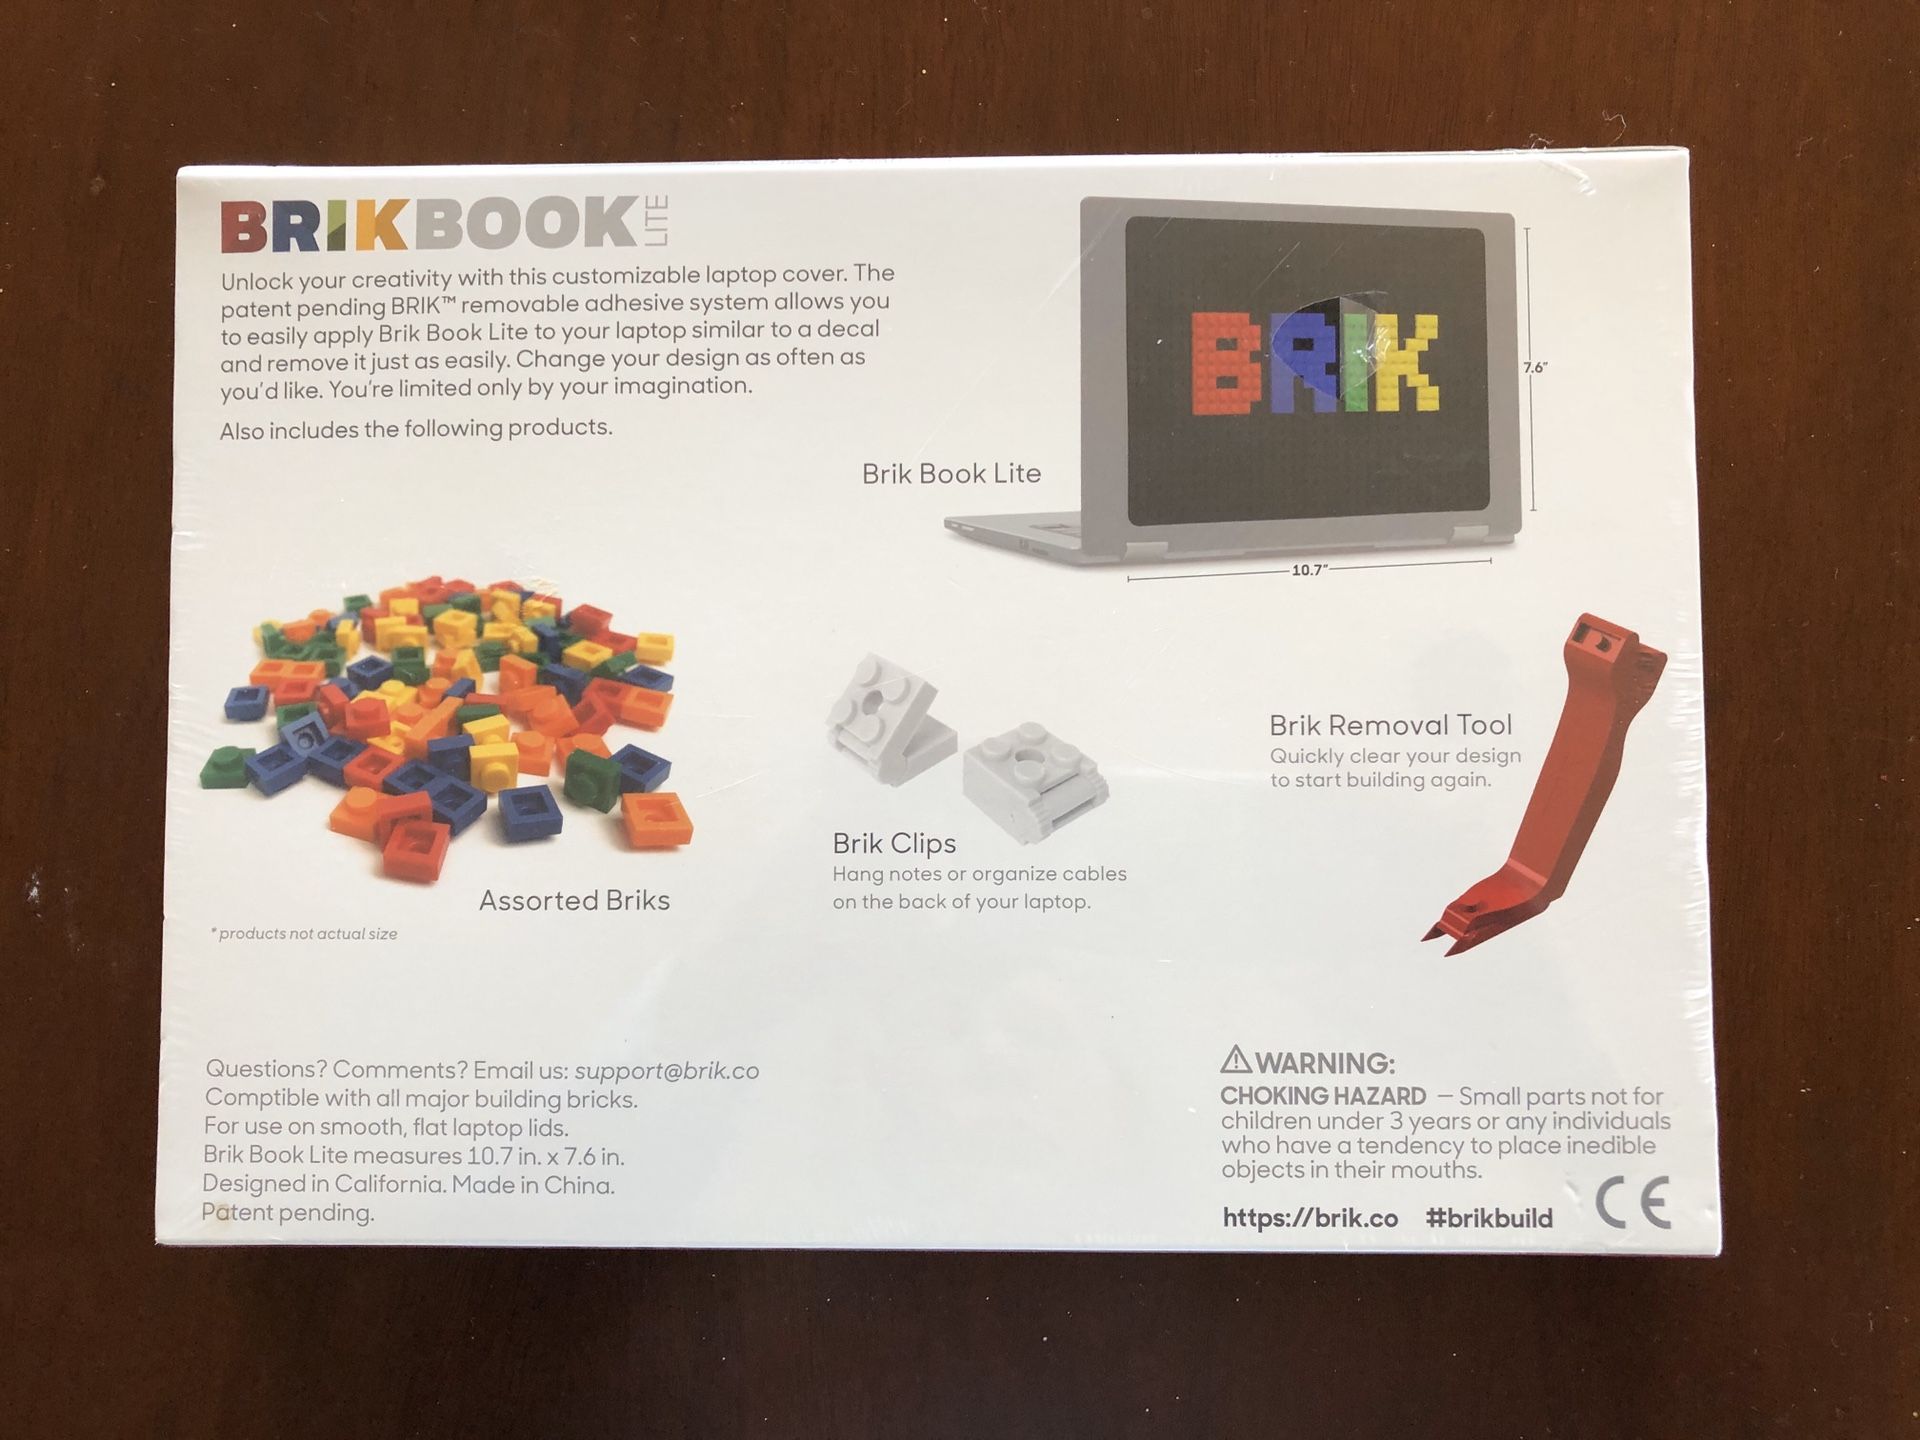 Brikbook laptop cover